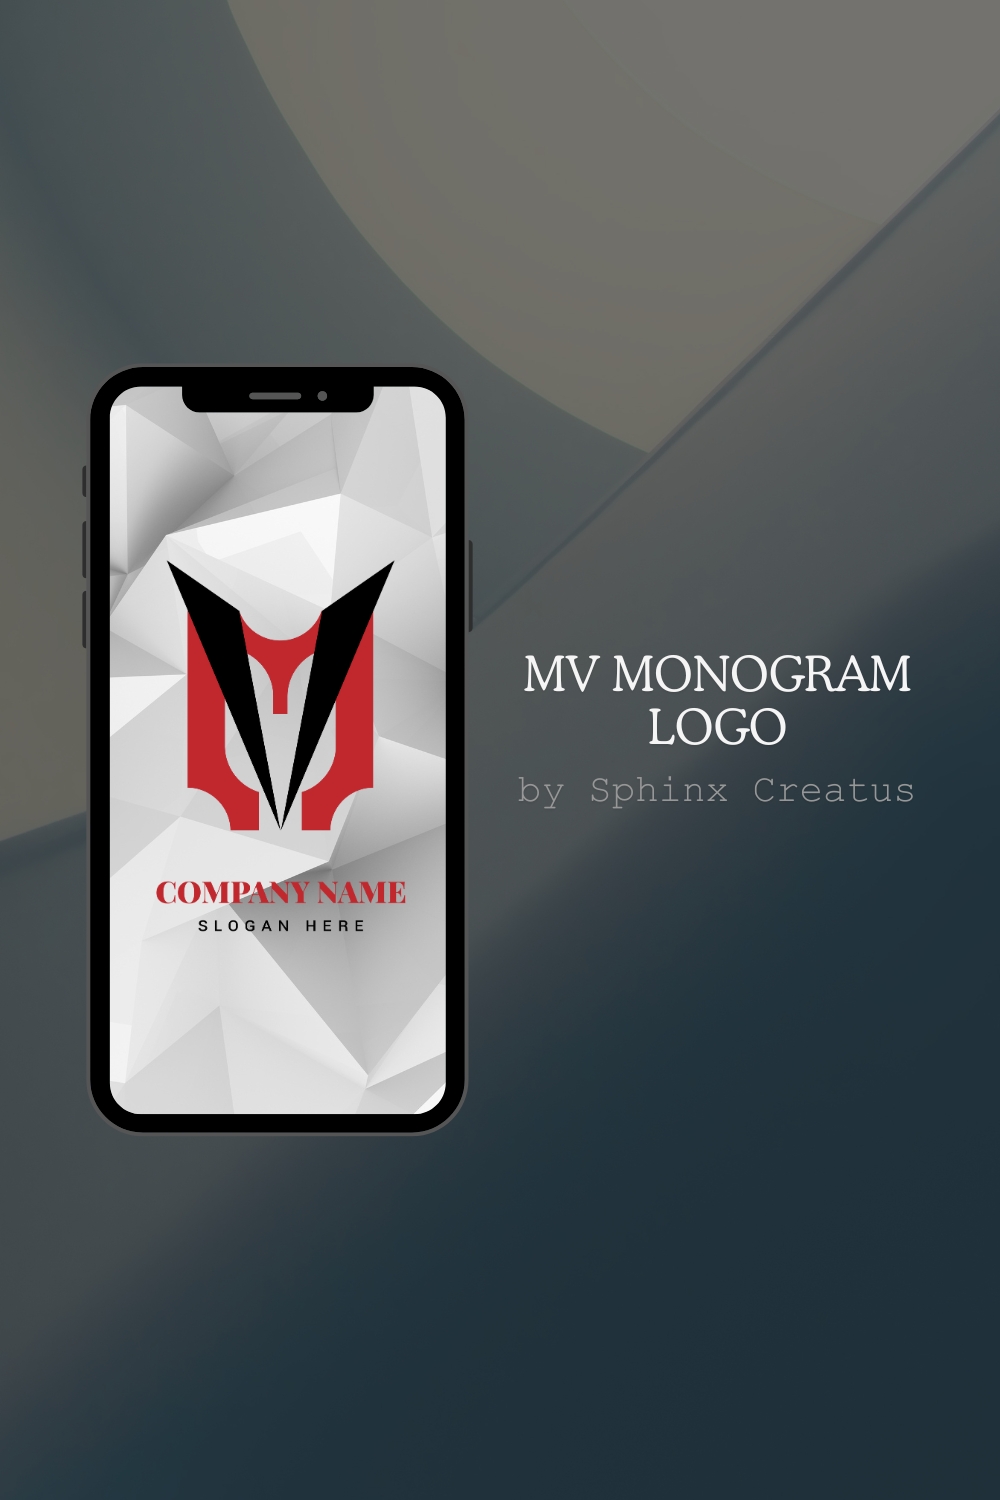 MV Monogram Logo [Sphinx Creatus] pinterest preview image.